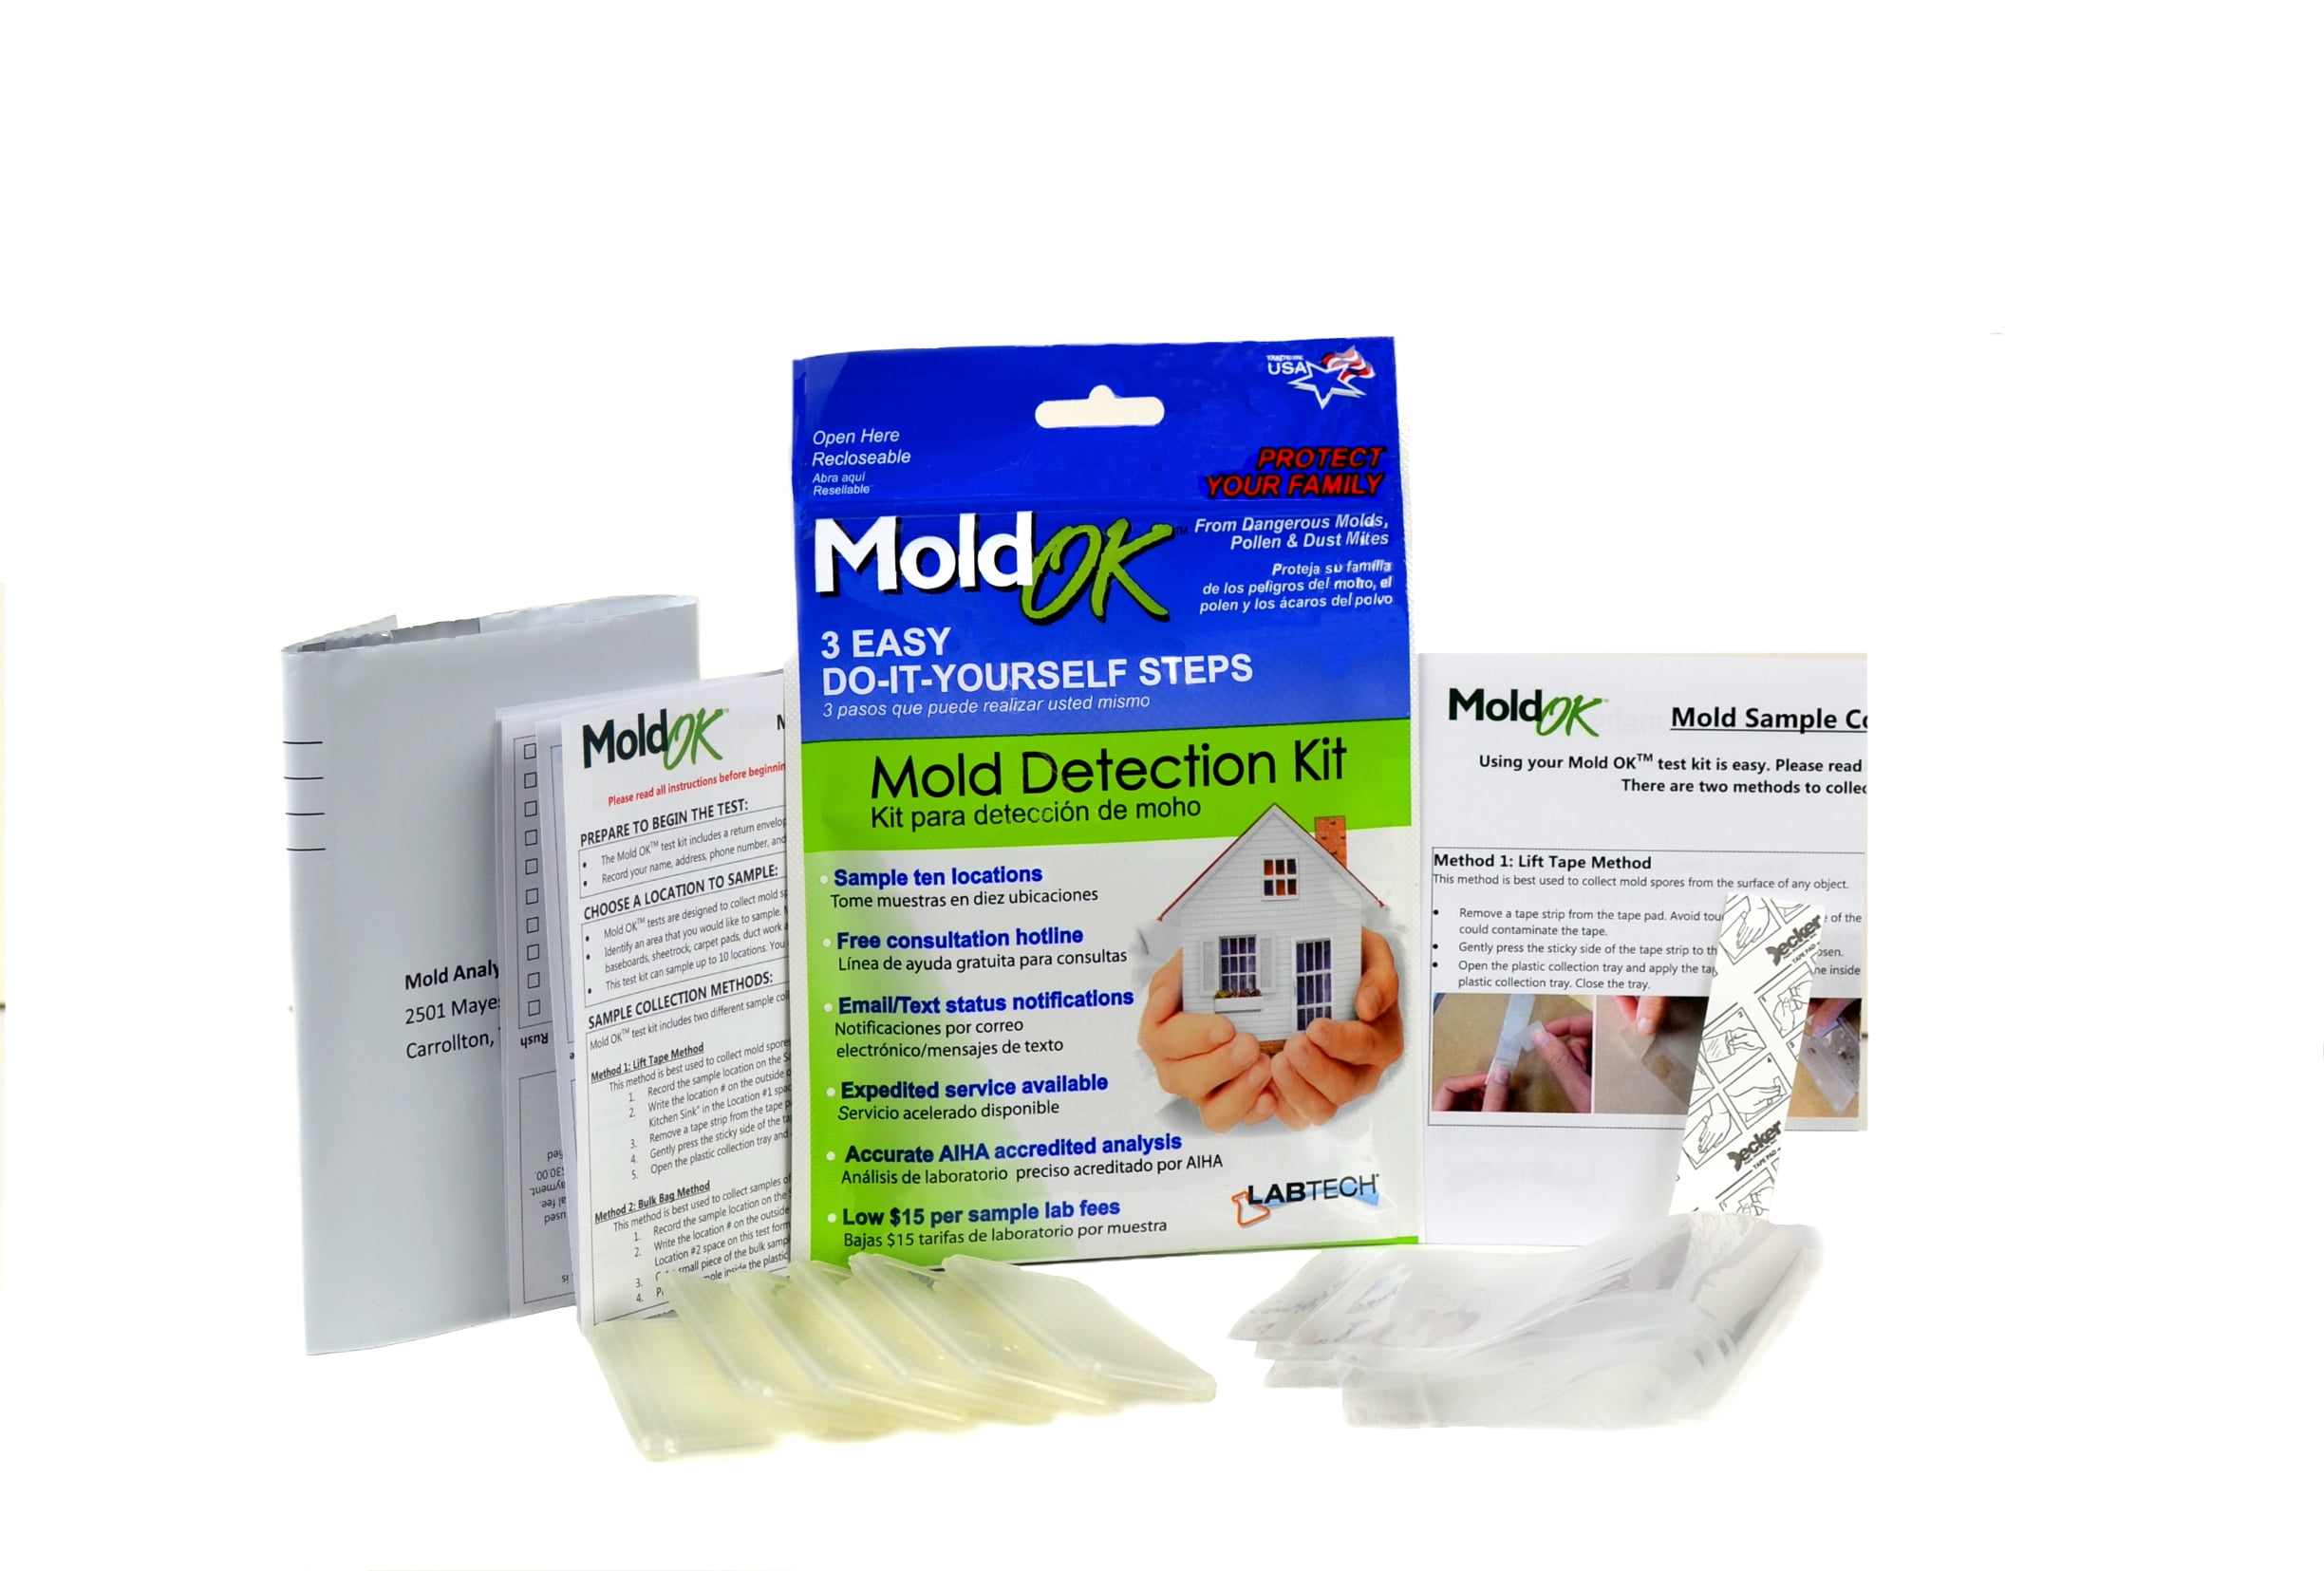 Mold Test — Brite Box Labs